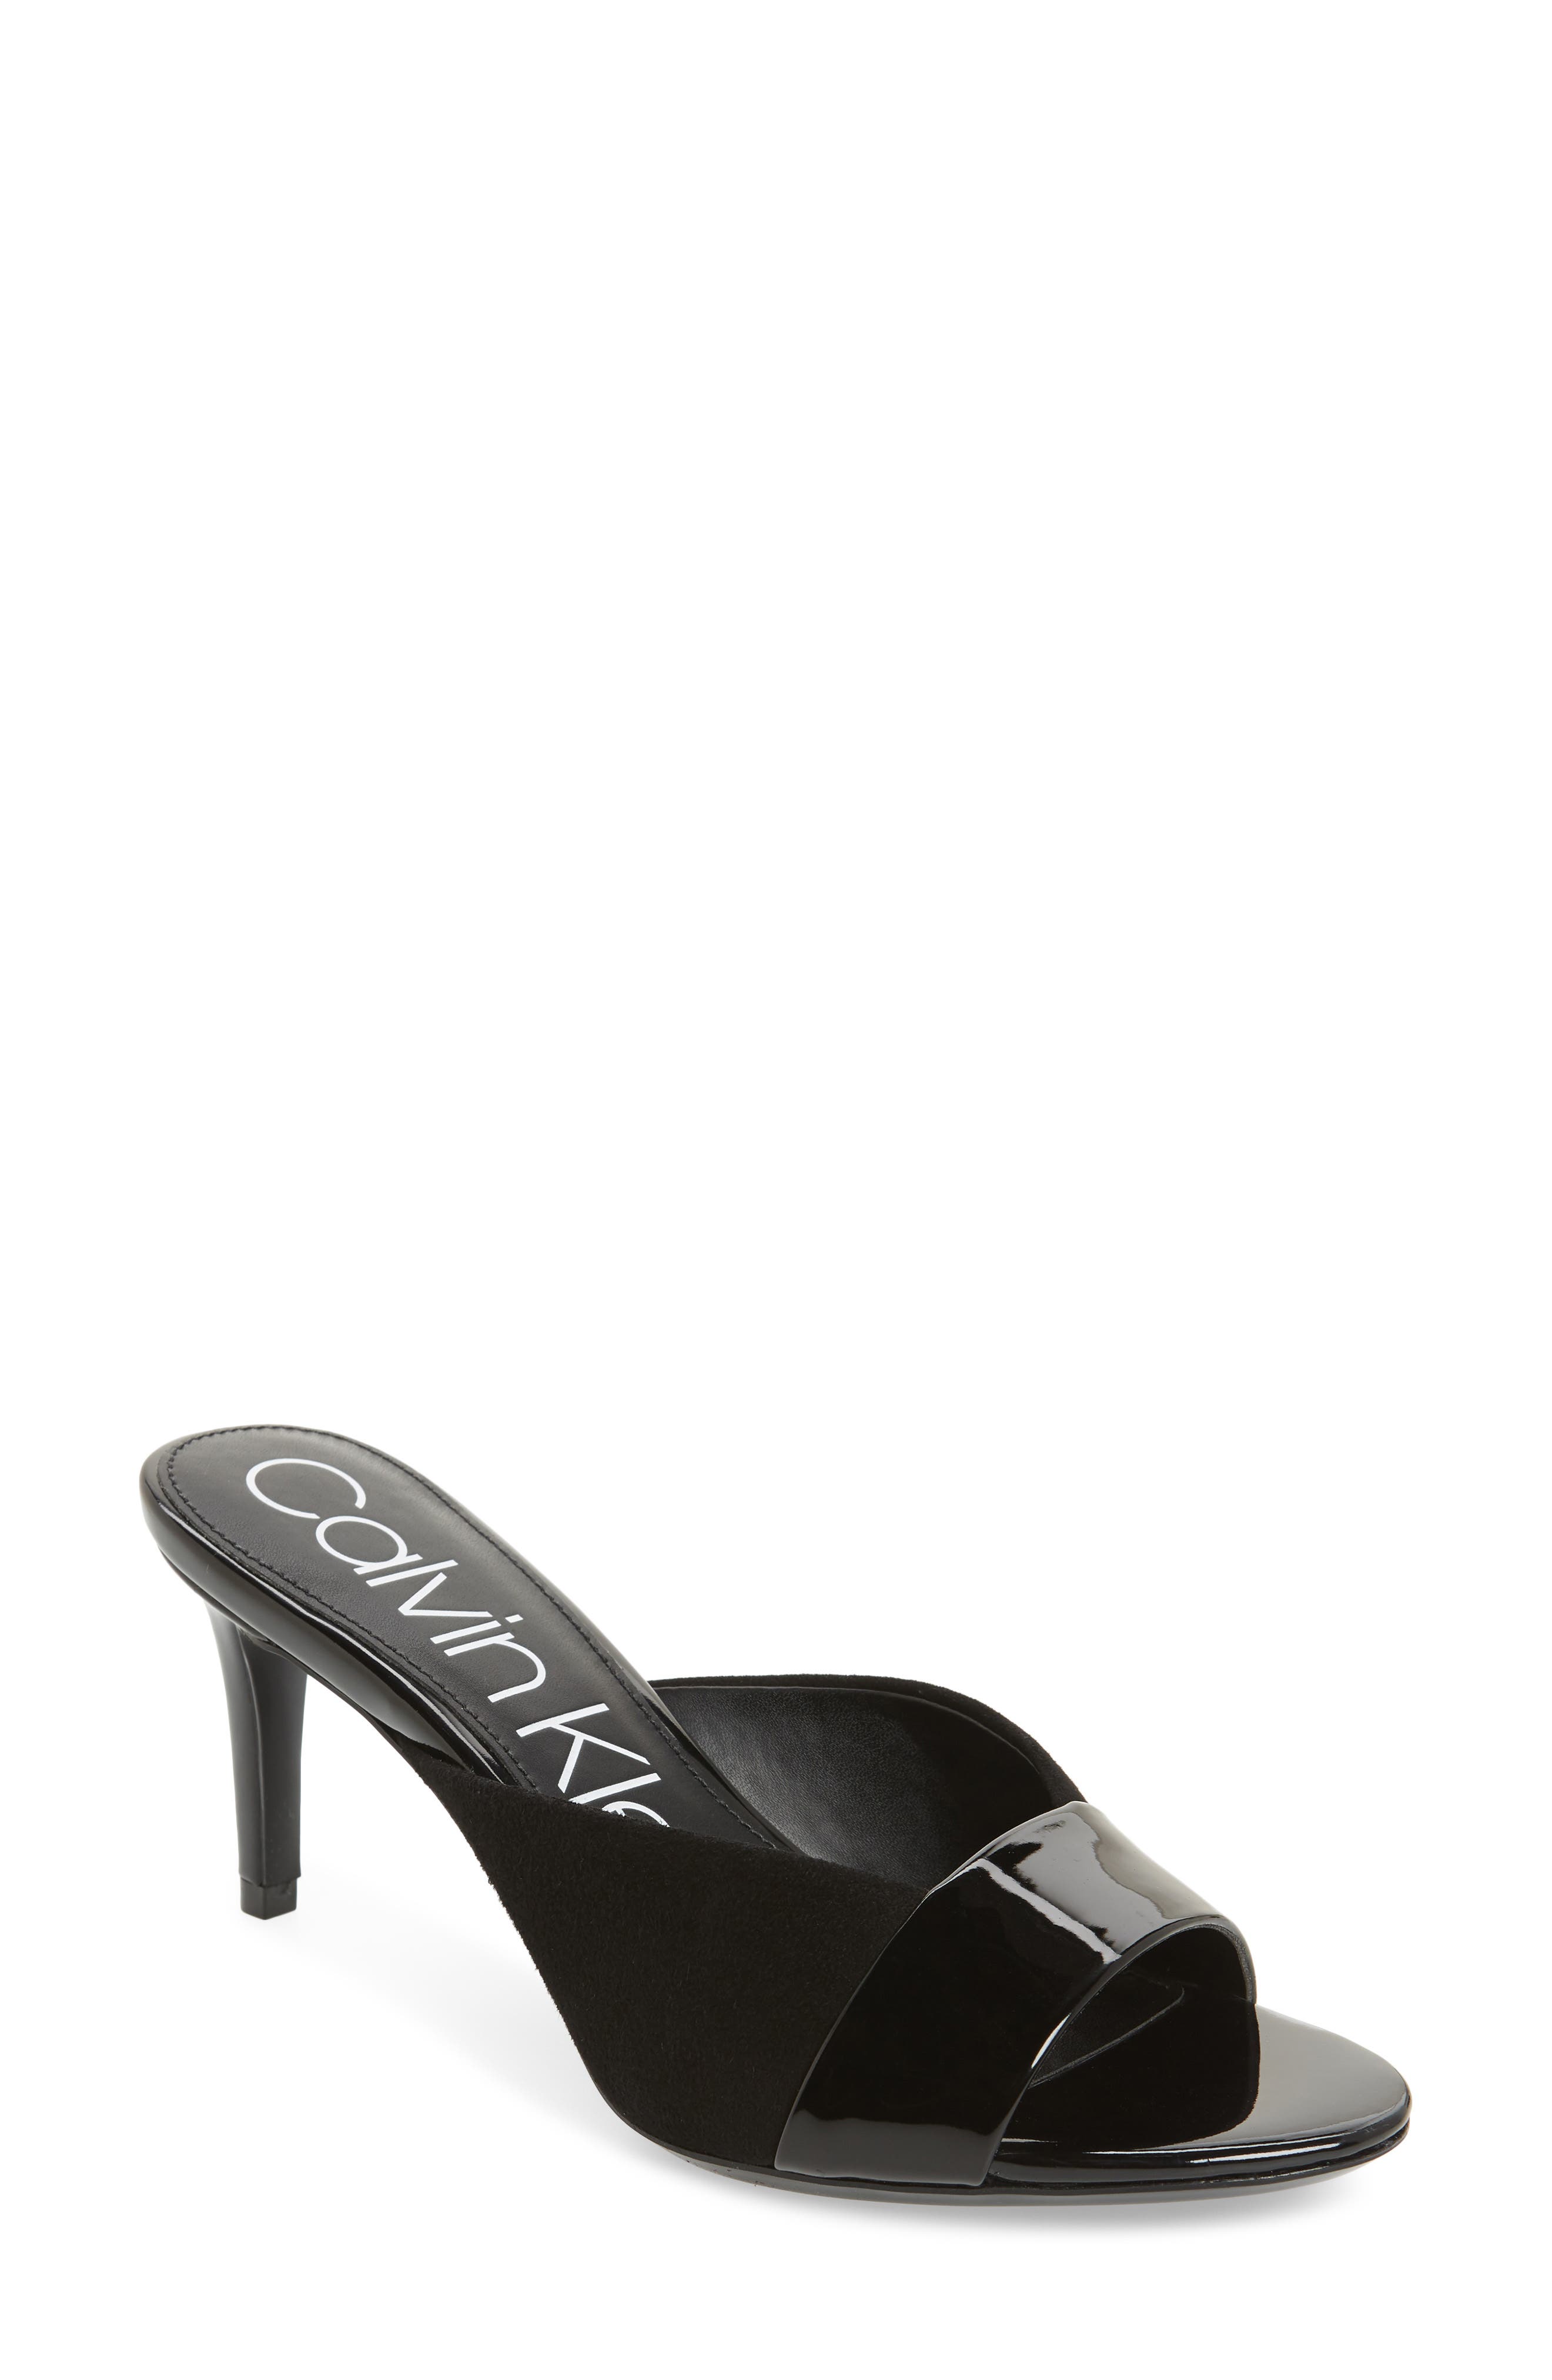 dream pairs women's chunk low heel pump sandals